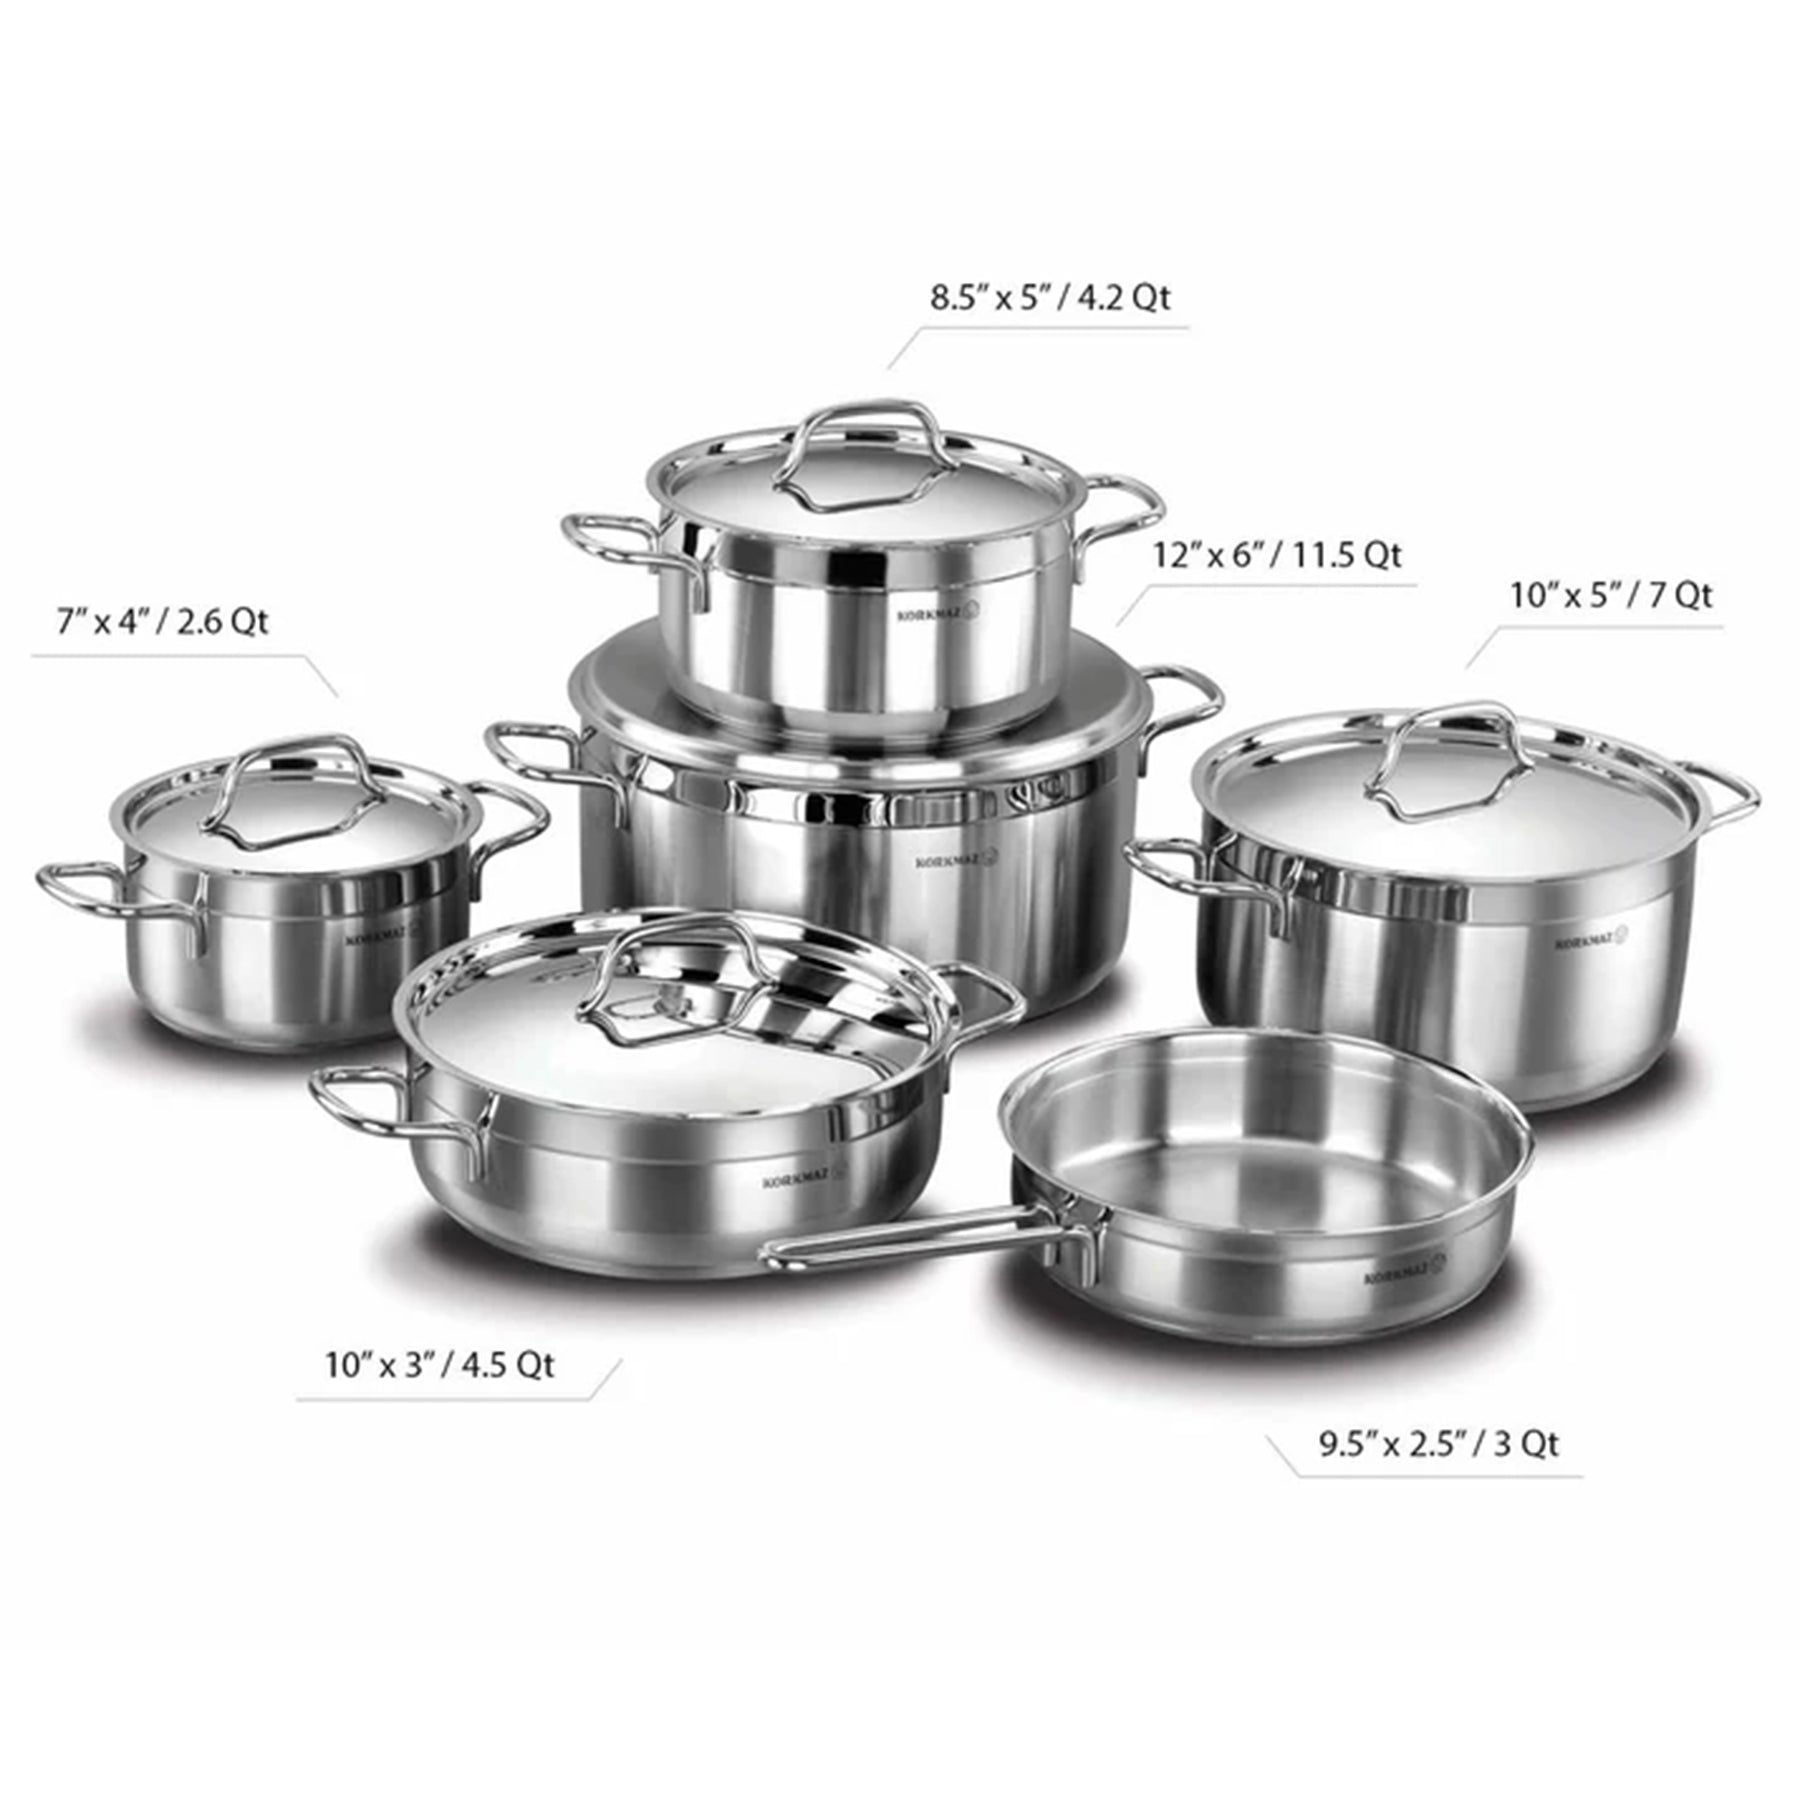 XL Cook Ware Set - Silver